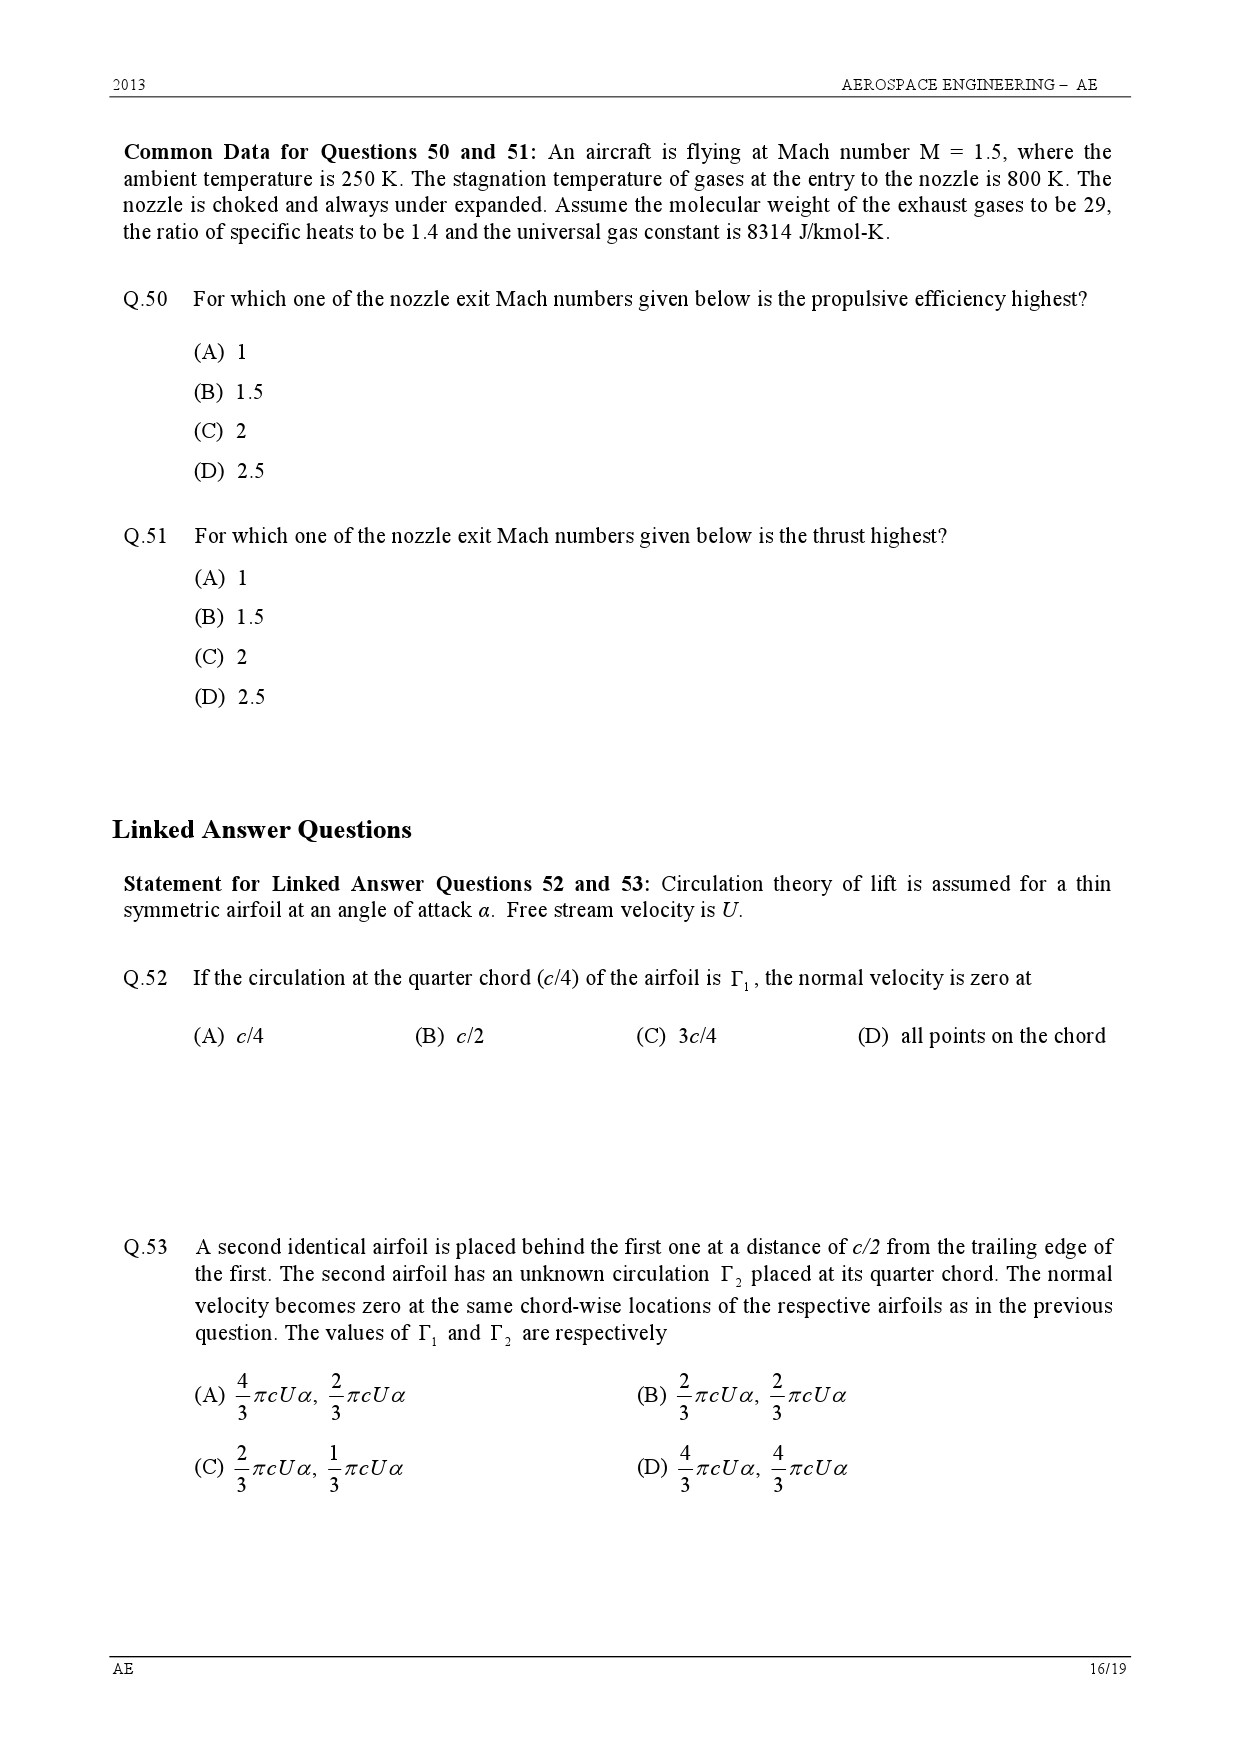 GATE Exam 2013 Aerospace Engineering Question Paper 16